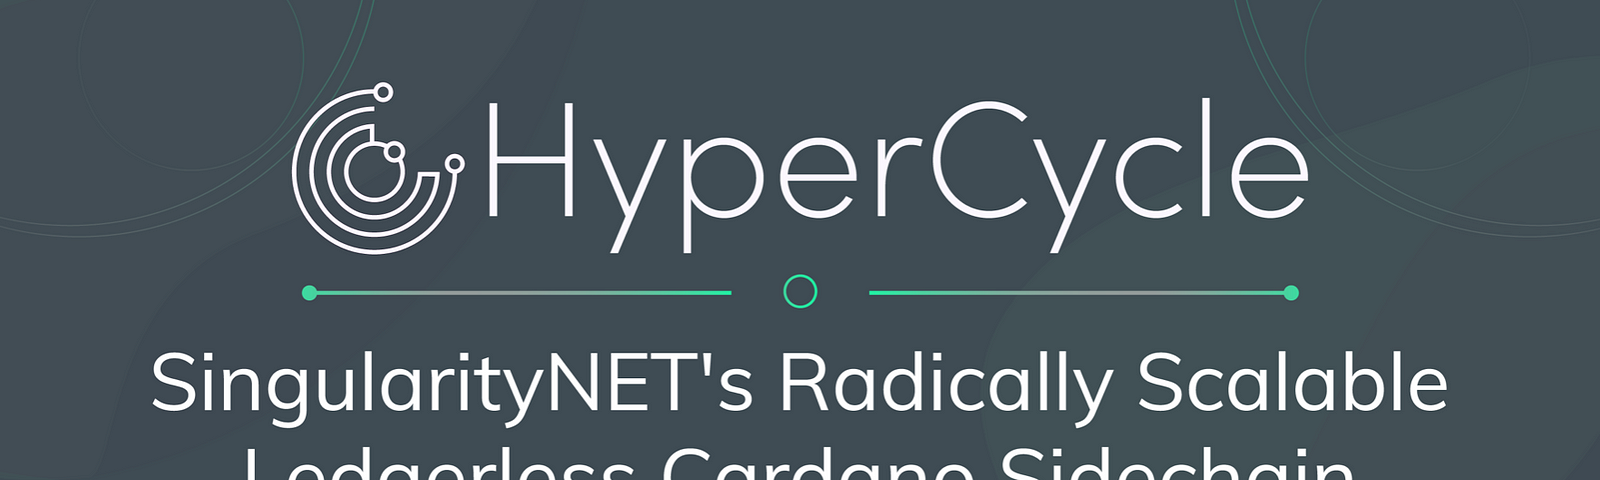 HyperCycle — SingularityNET’s Radically Scalable Ledgerless Cardano Sidechain